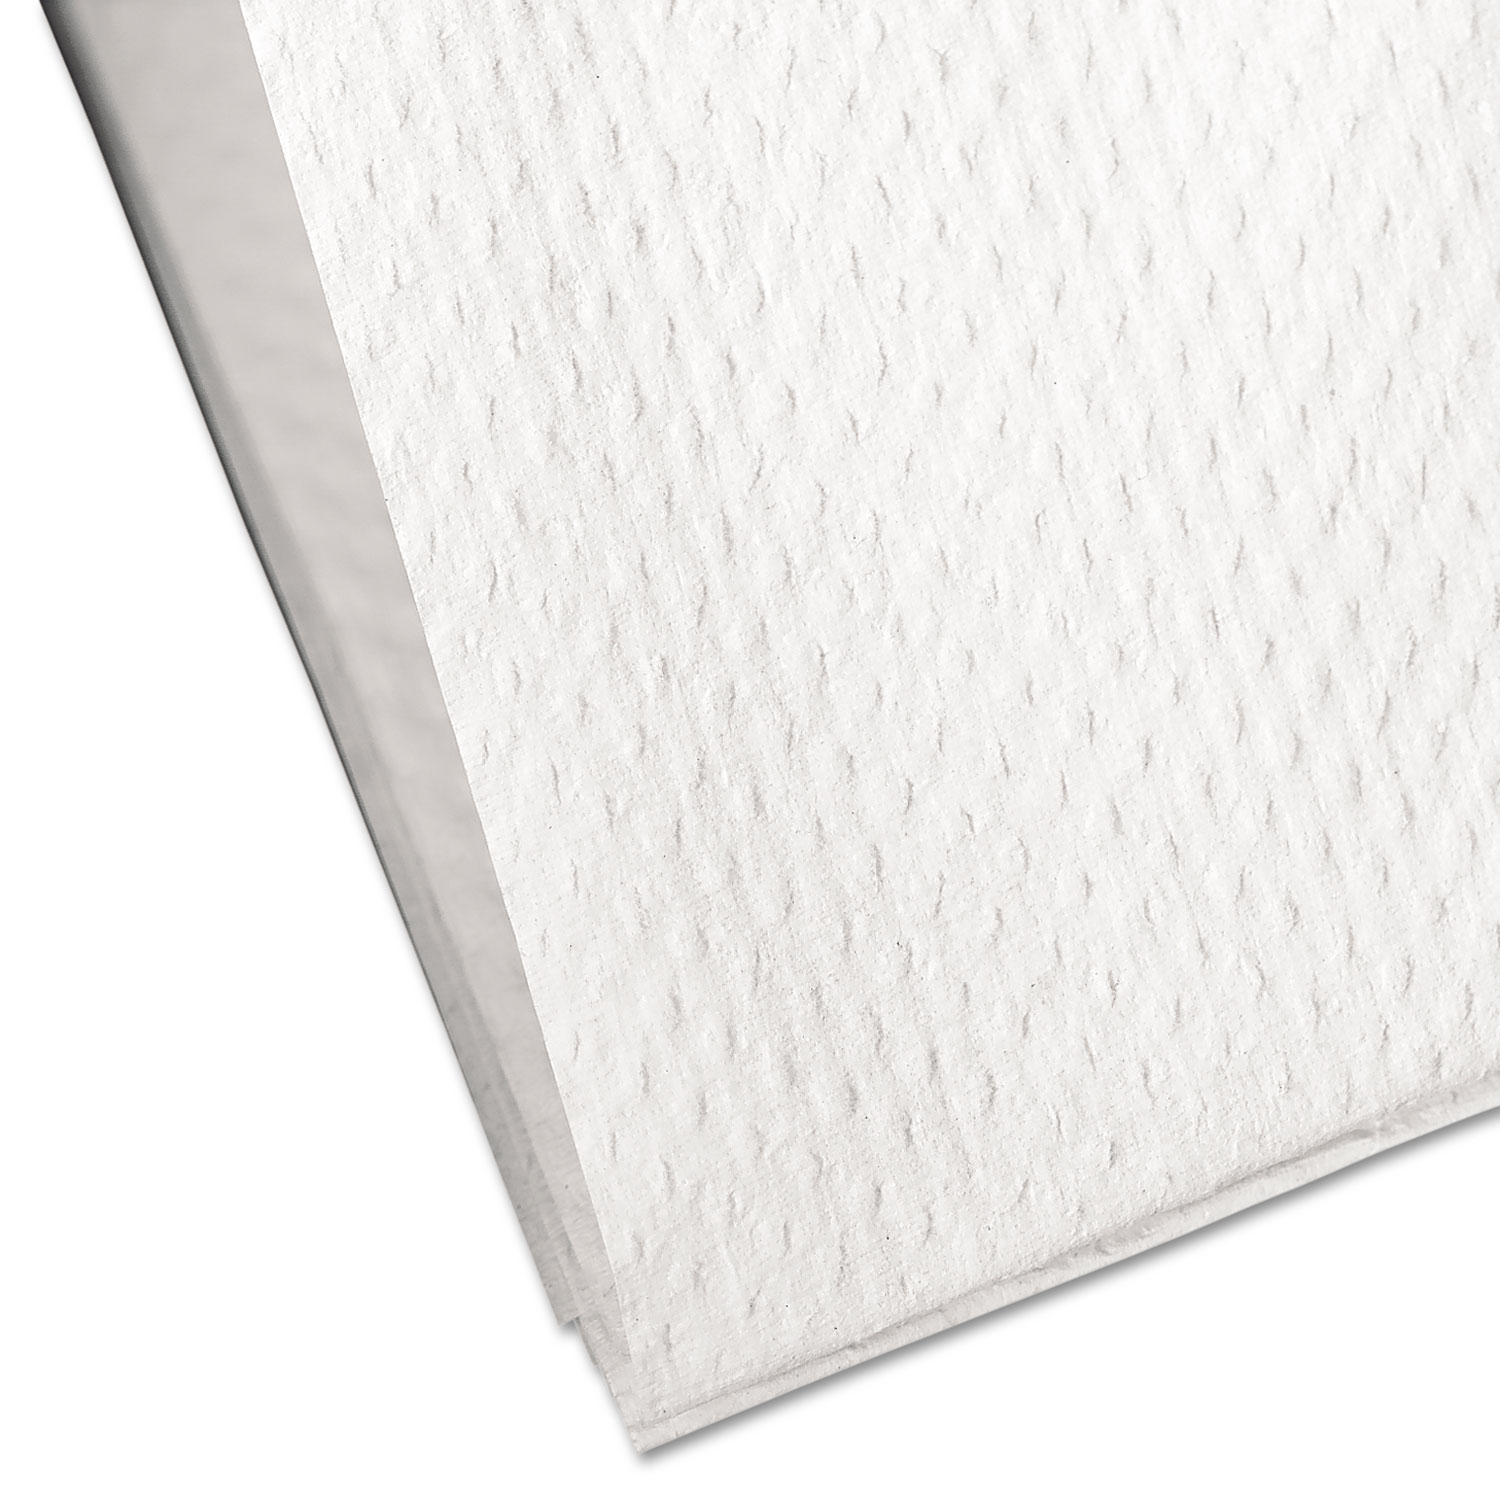 Single-Fold Paper Towel, 10 1/4 x 9 1/4, White, 250/Pack, 16 Packs/Carton